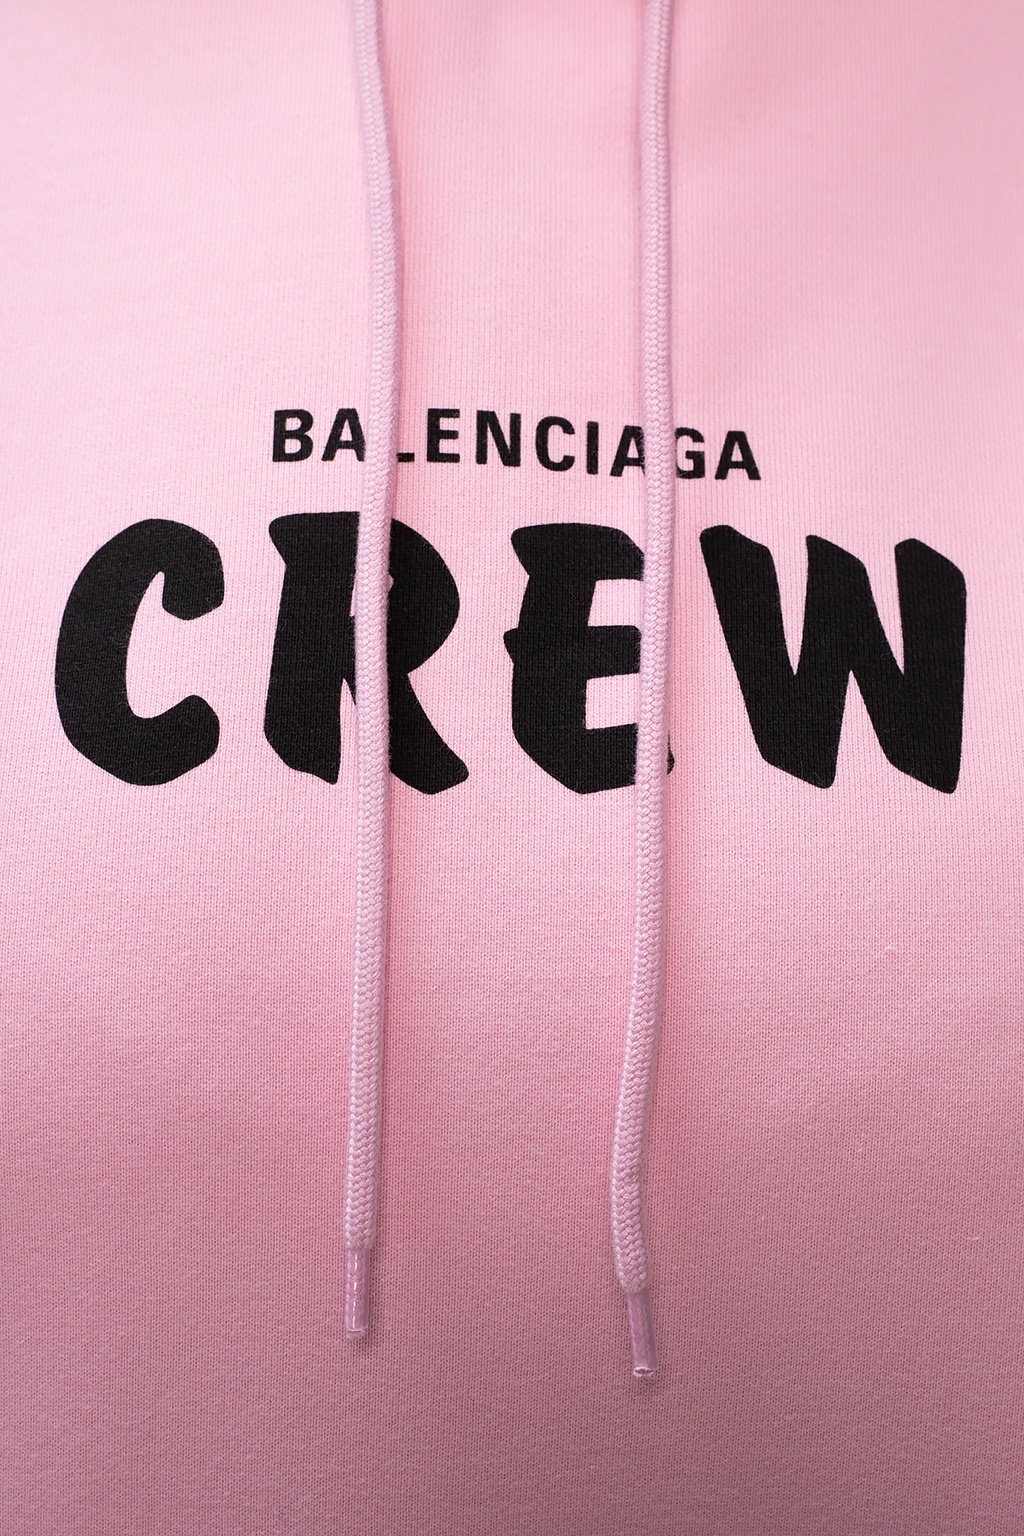 Balenciaga Washed Out Pink Crew Neck Sweatshirt  Balardi